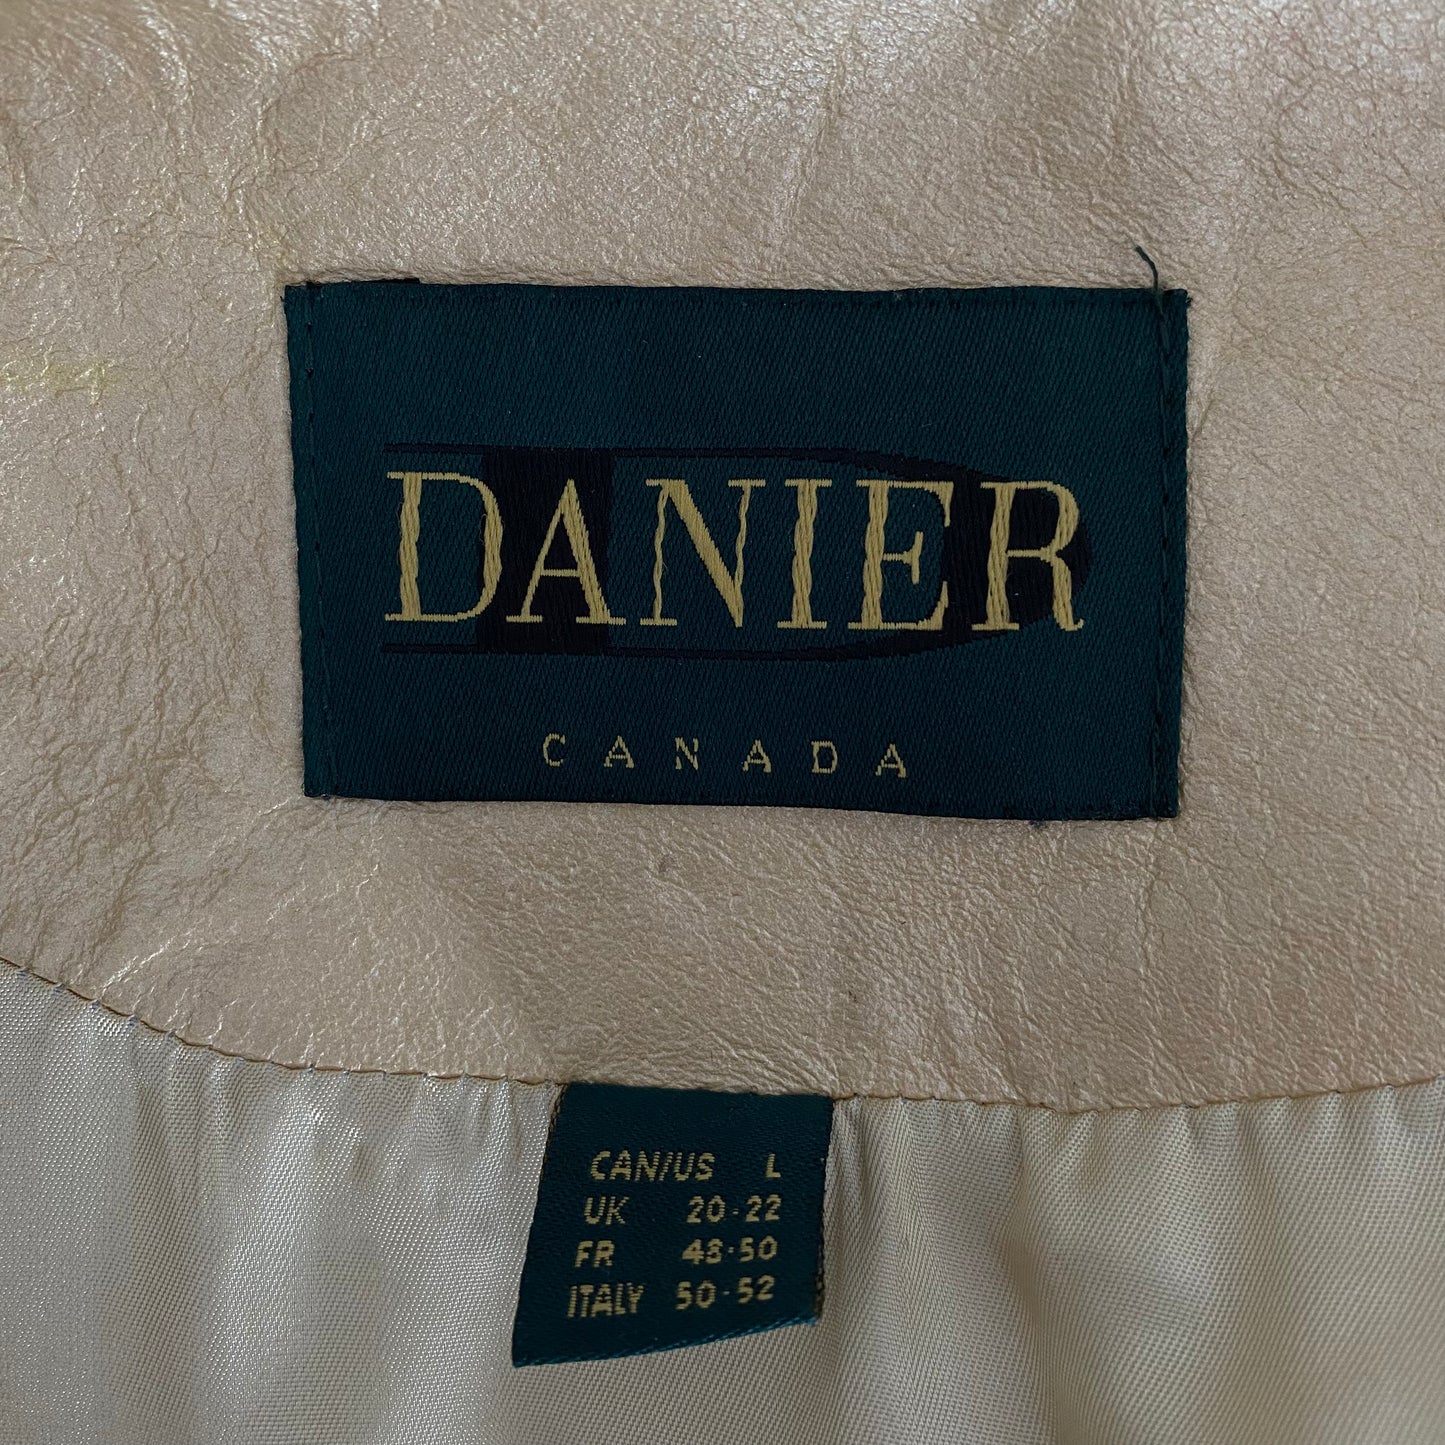 Vintage Danier Metallic Gold Leather Jacket Size Large